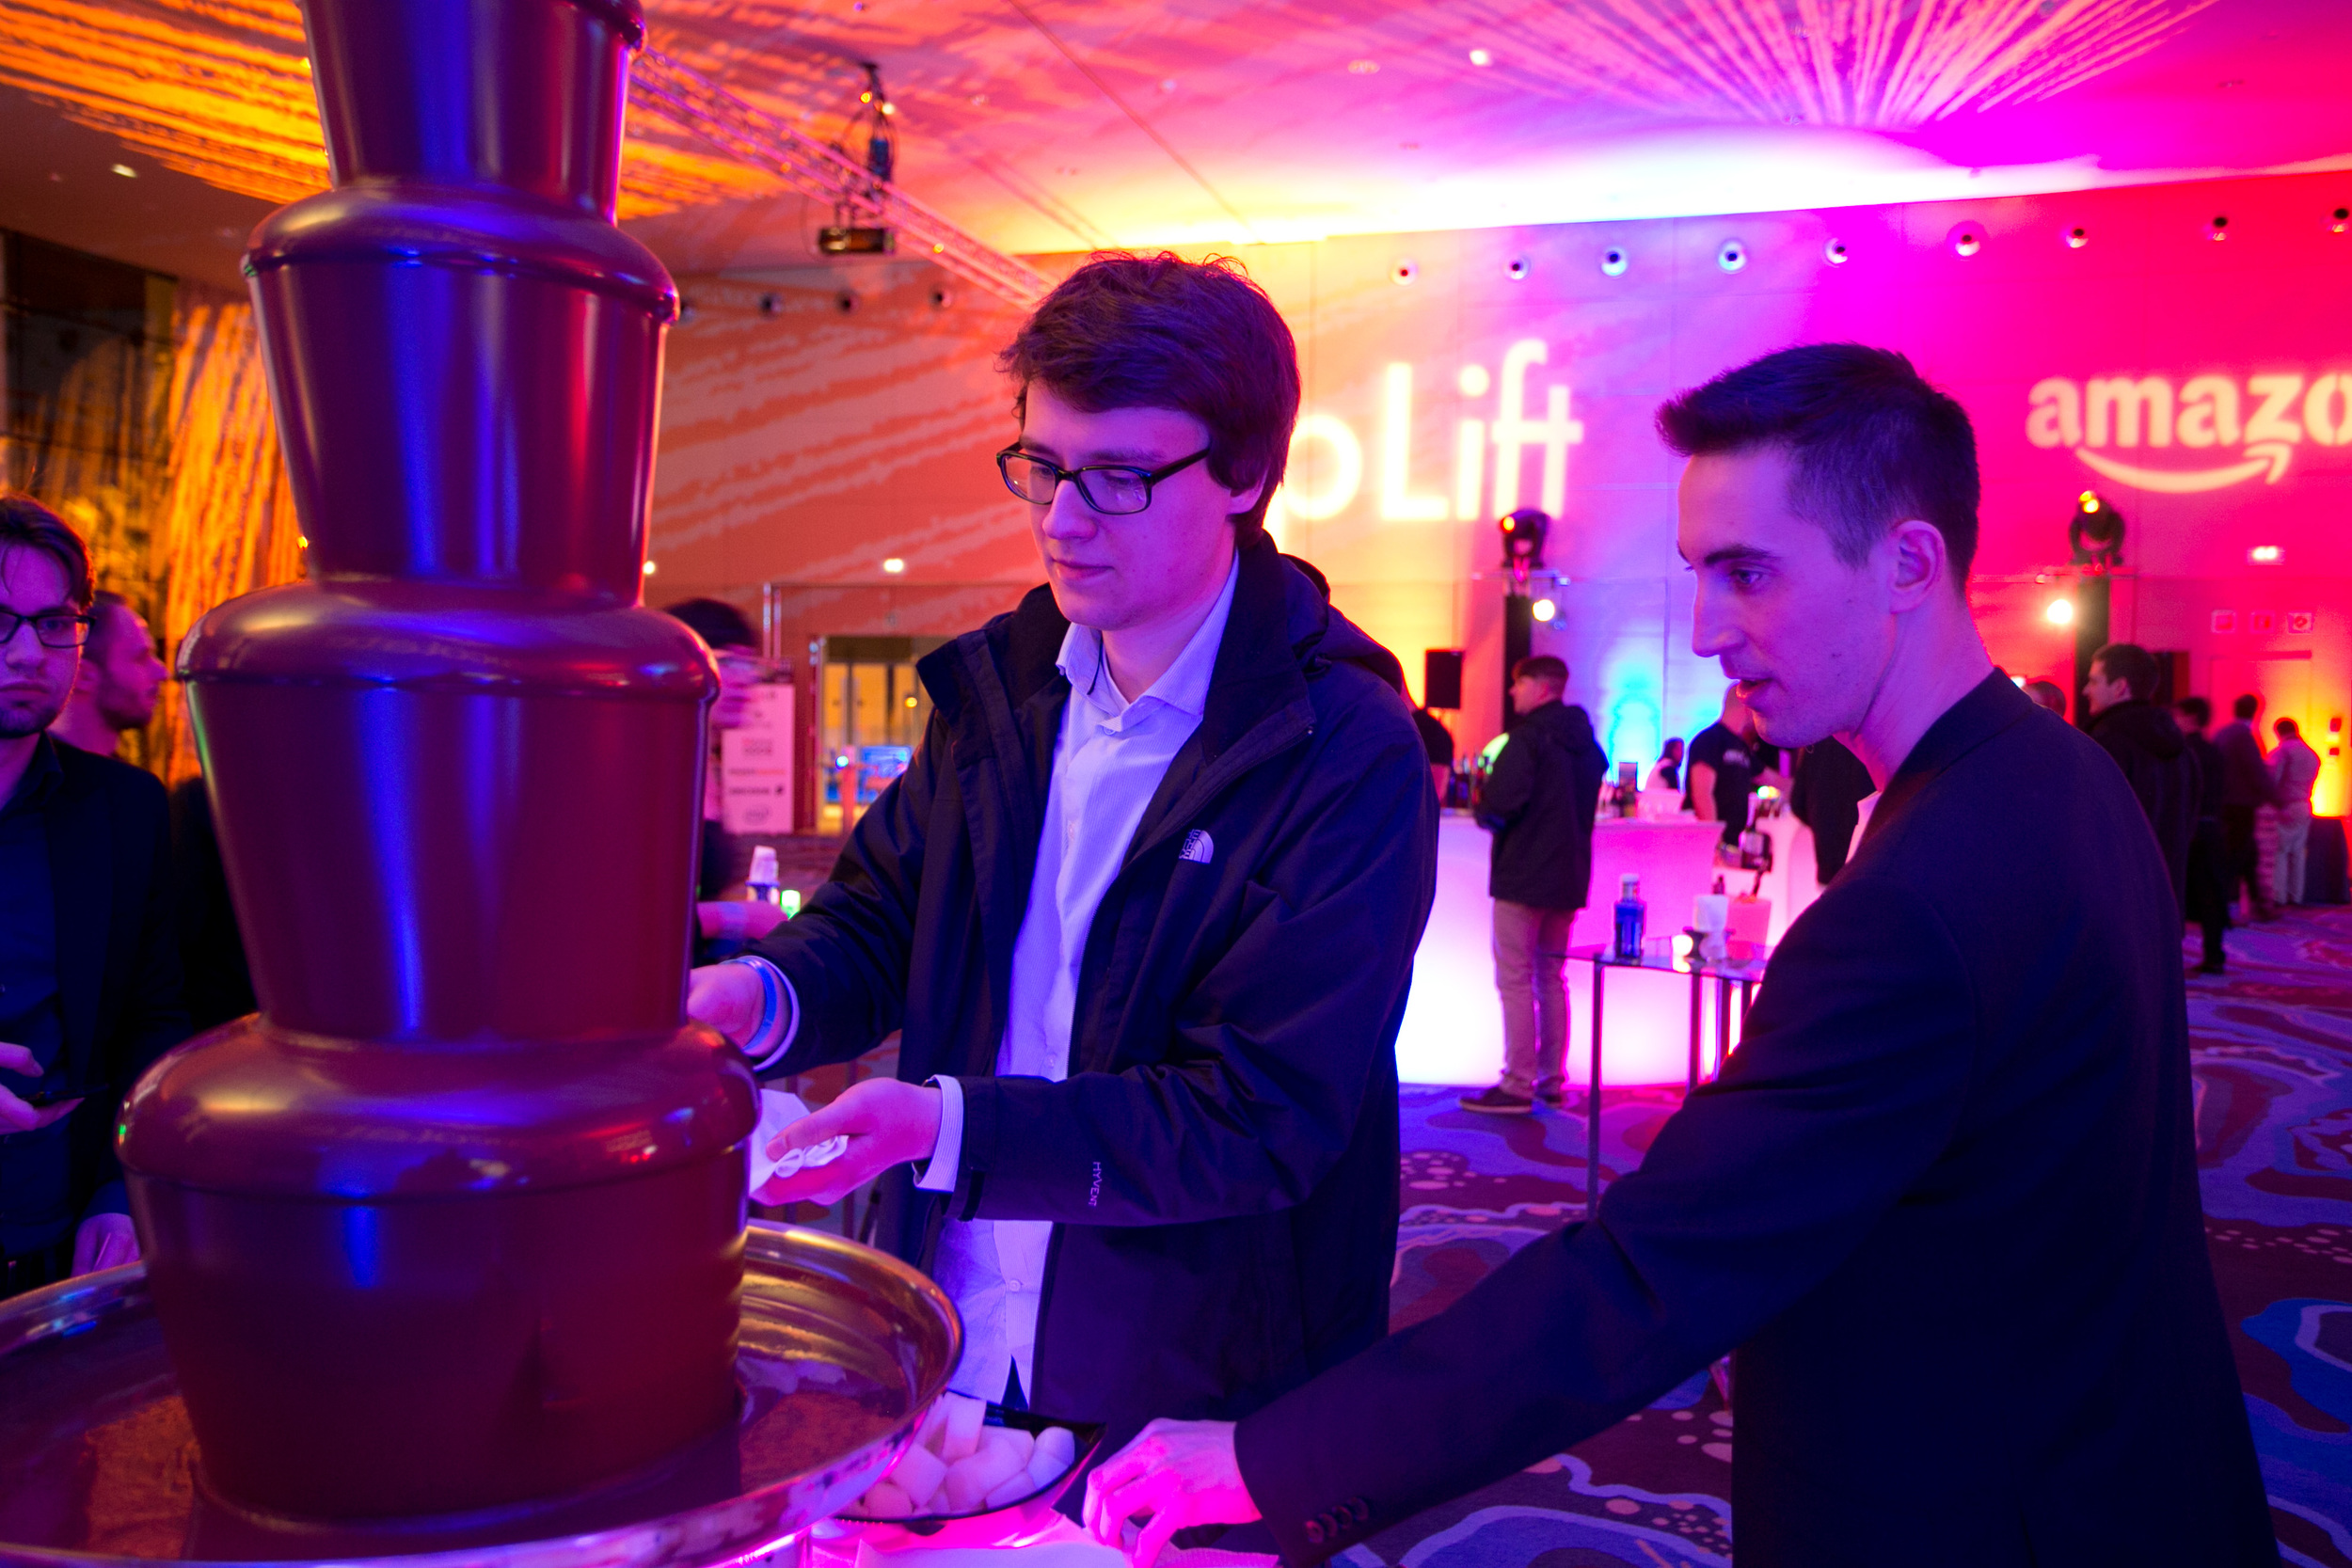 Guests enjoy the chocolate fondue